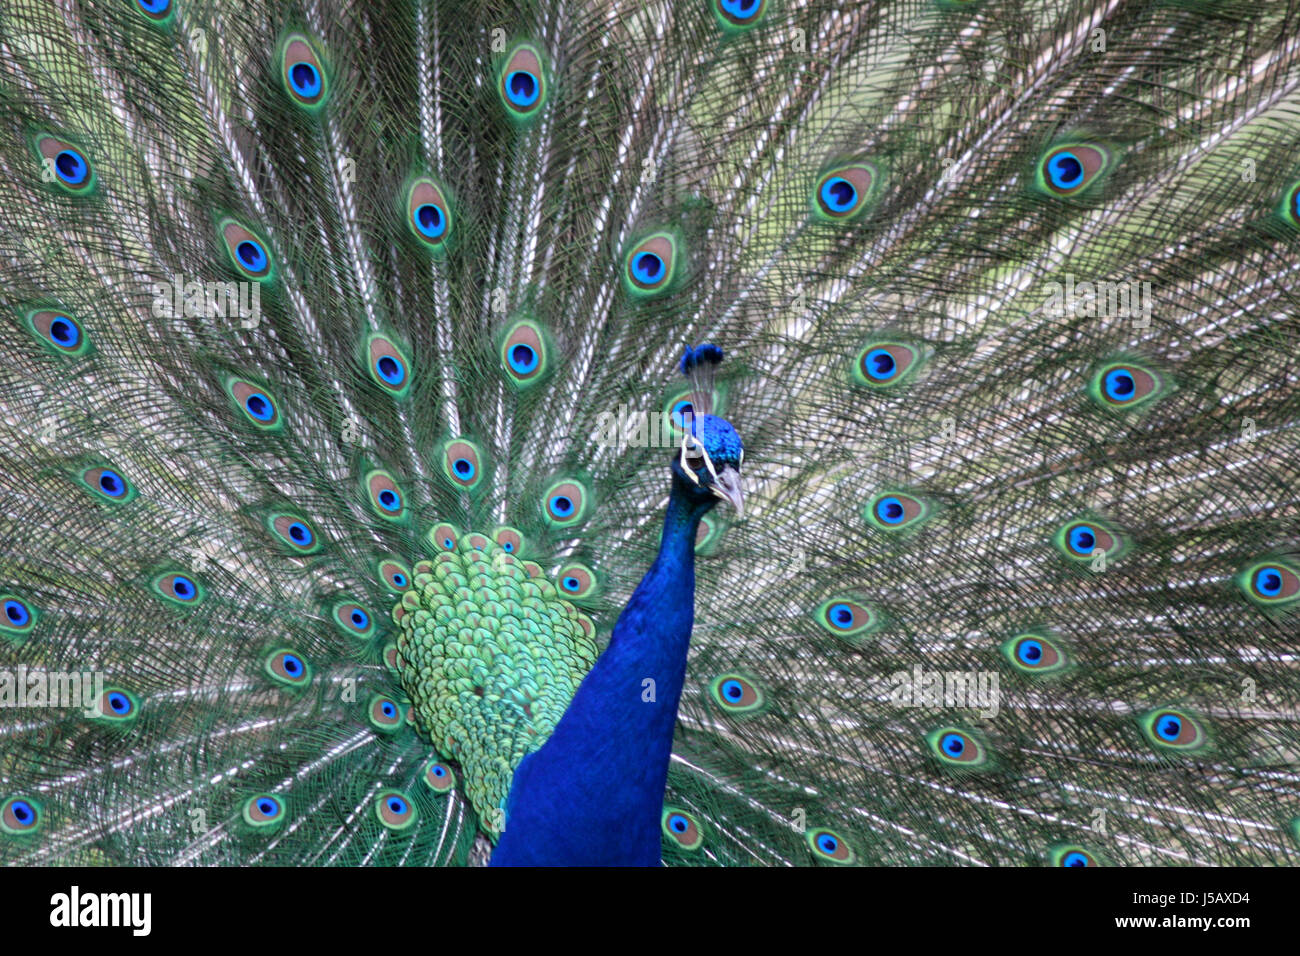 blue wheel bird birds feathers plumage peacock male peacock